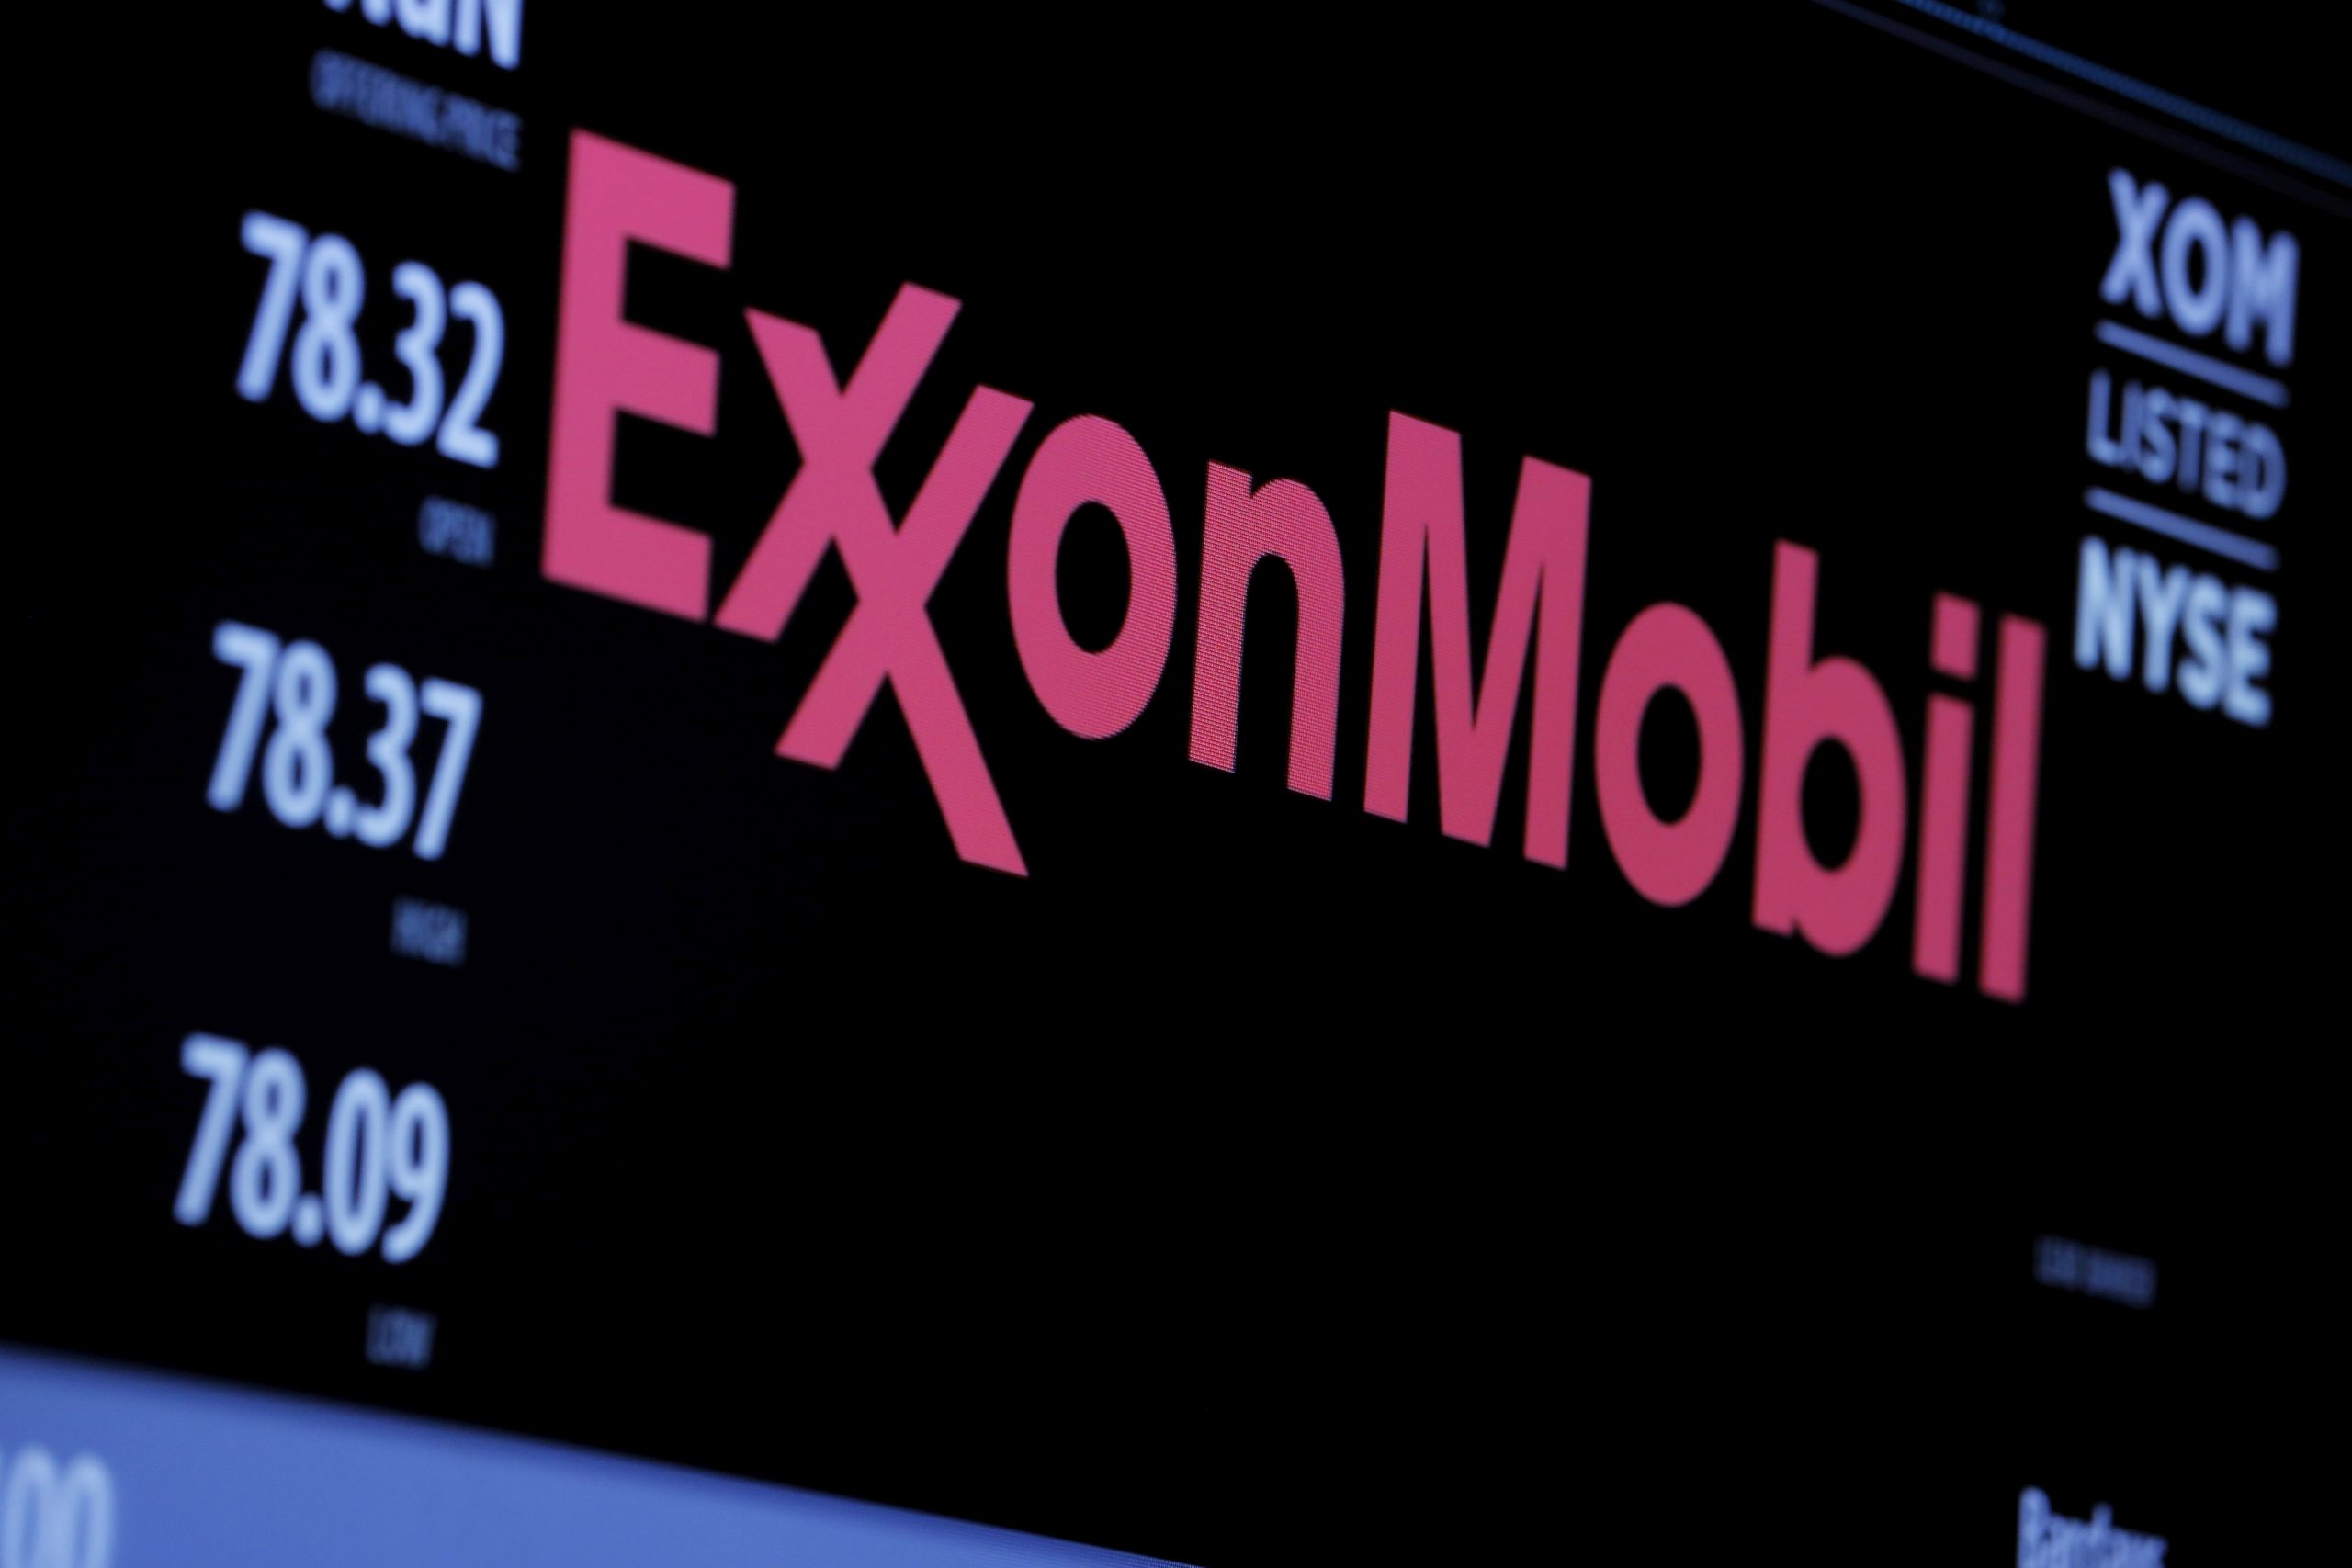  Exxon loses board seats to activist hedge fund in landmark climate vote